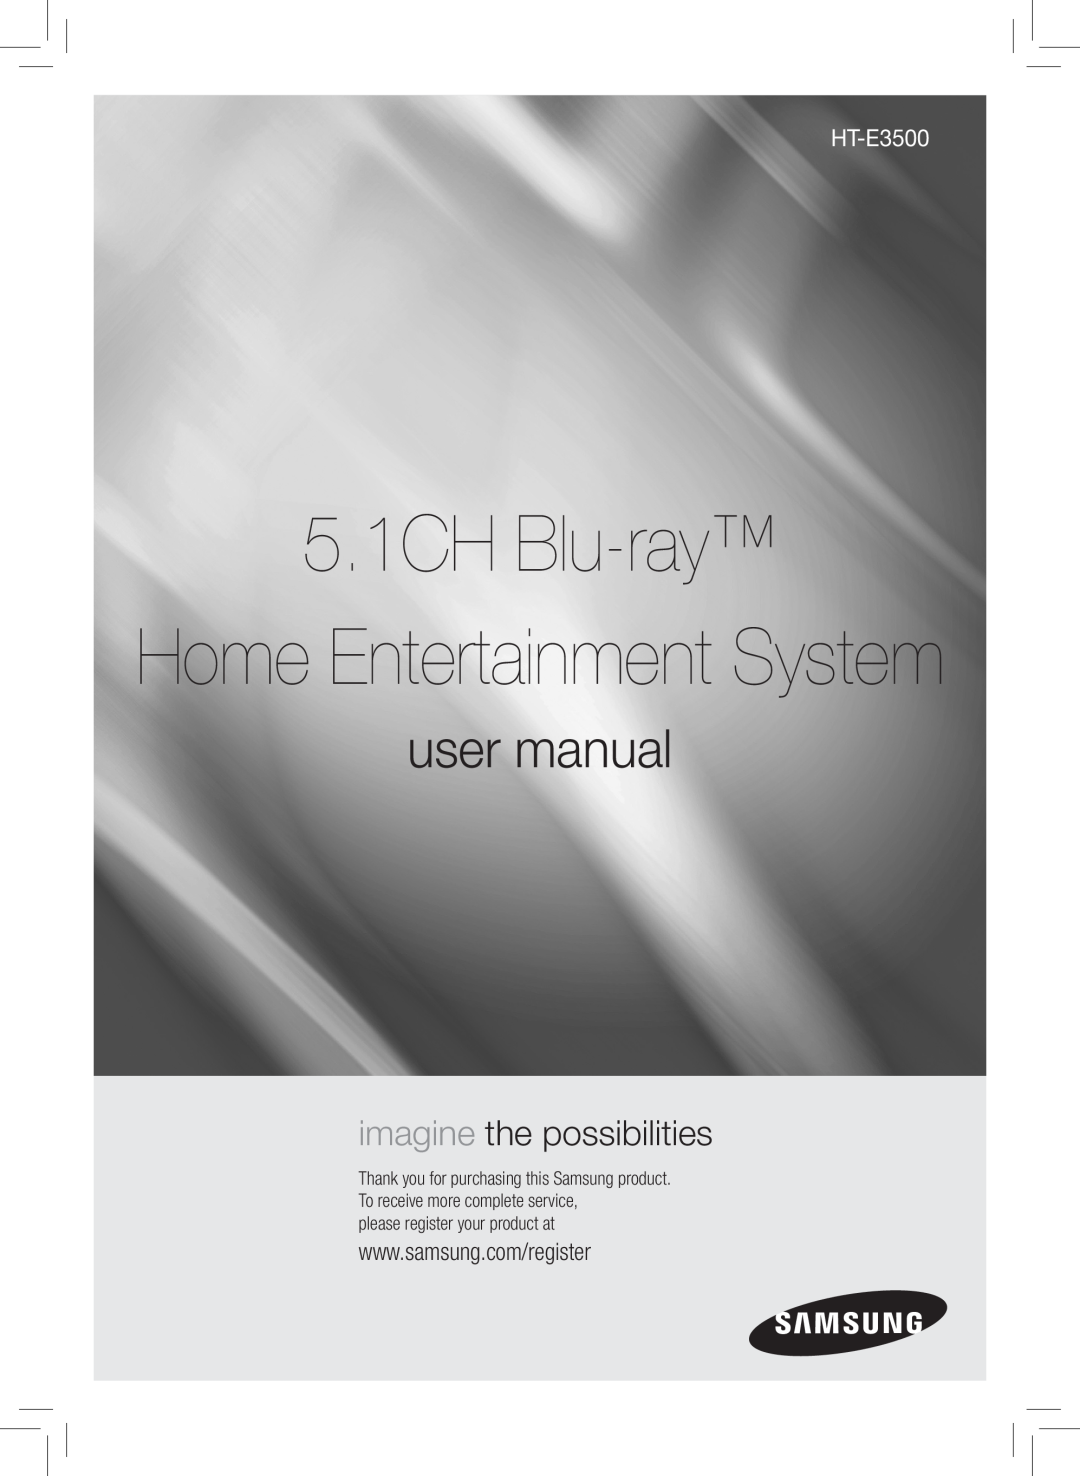 Samsung HTE3500ZA user manual HT-E3500, 5.1CH Blu-ray, Home Entertainment System, imagine the possibilities 